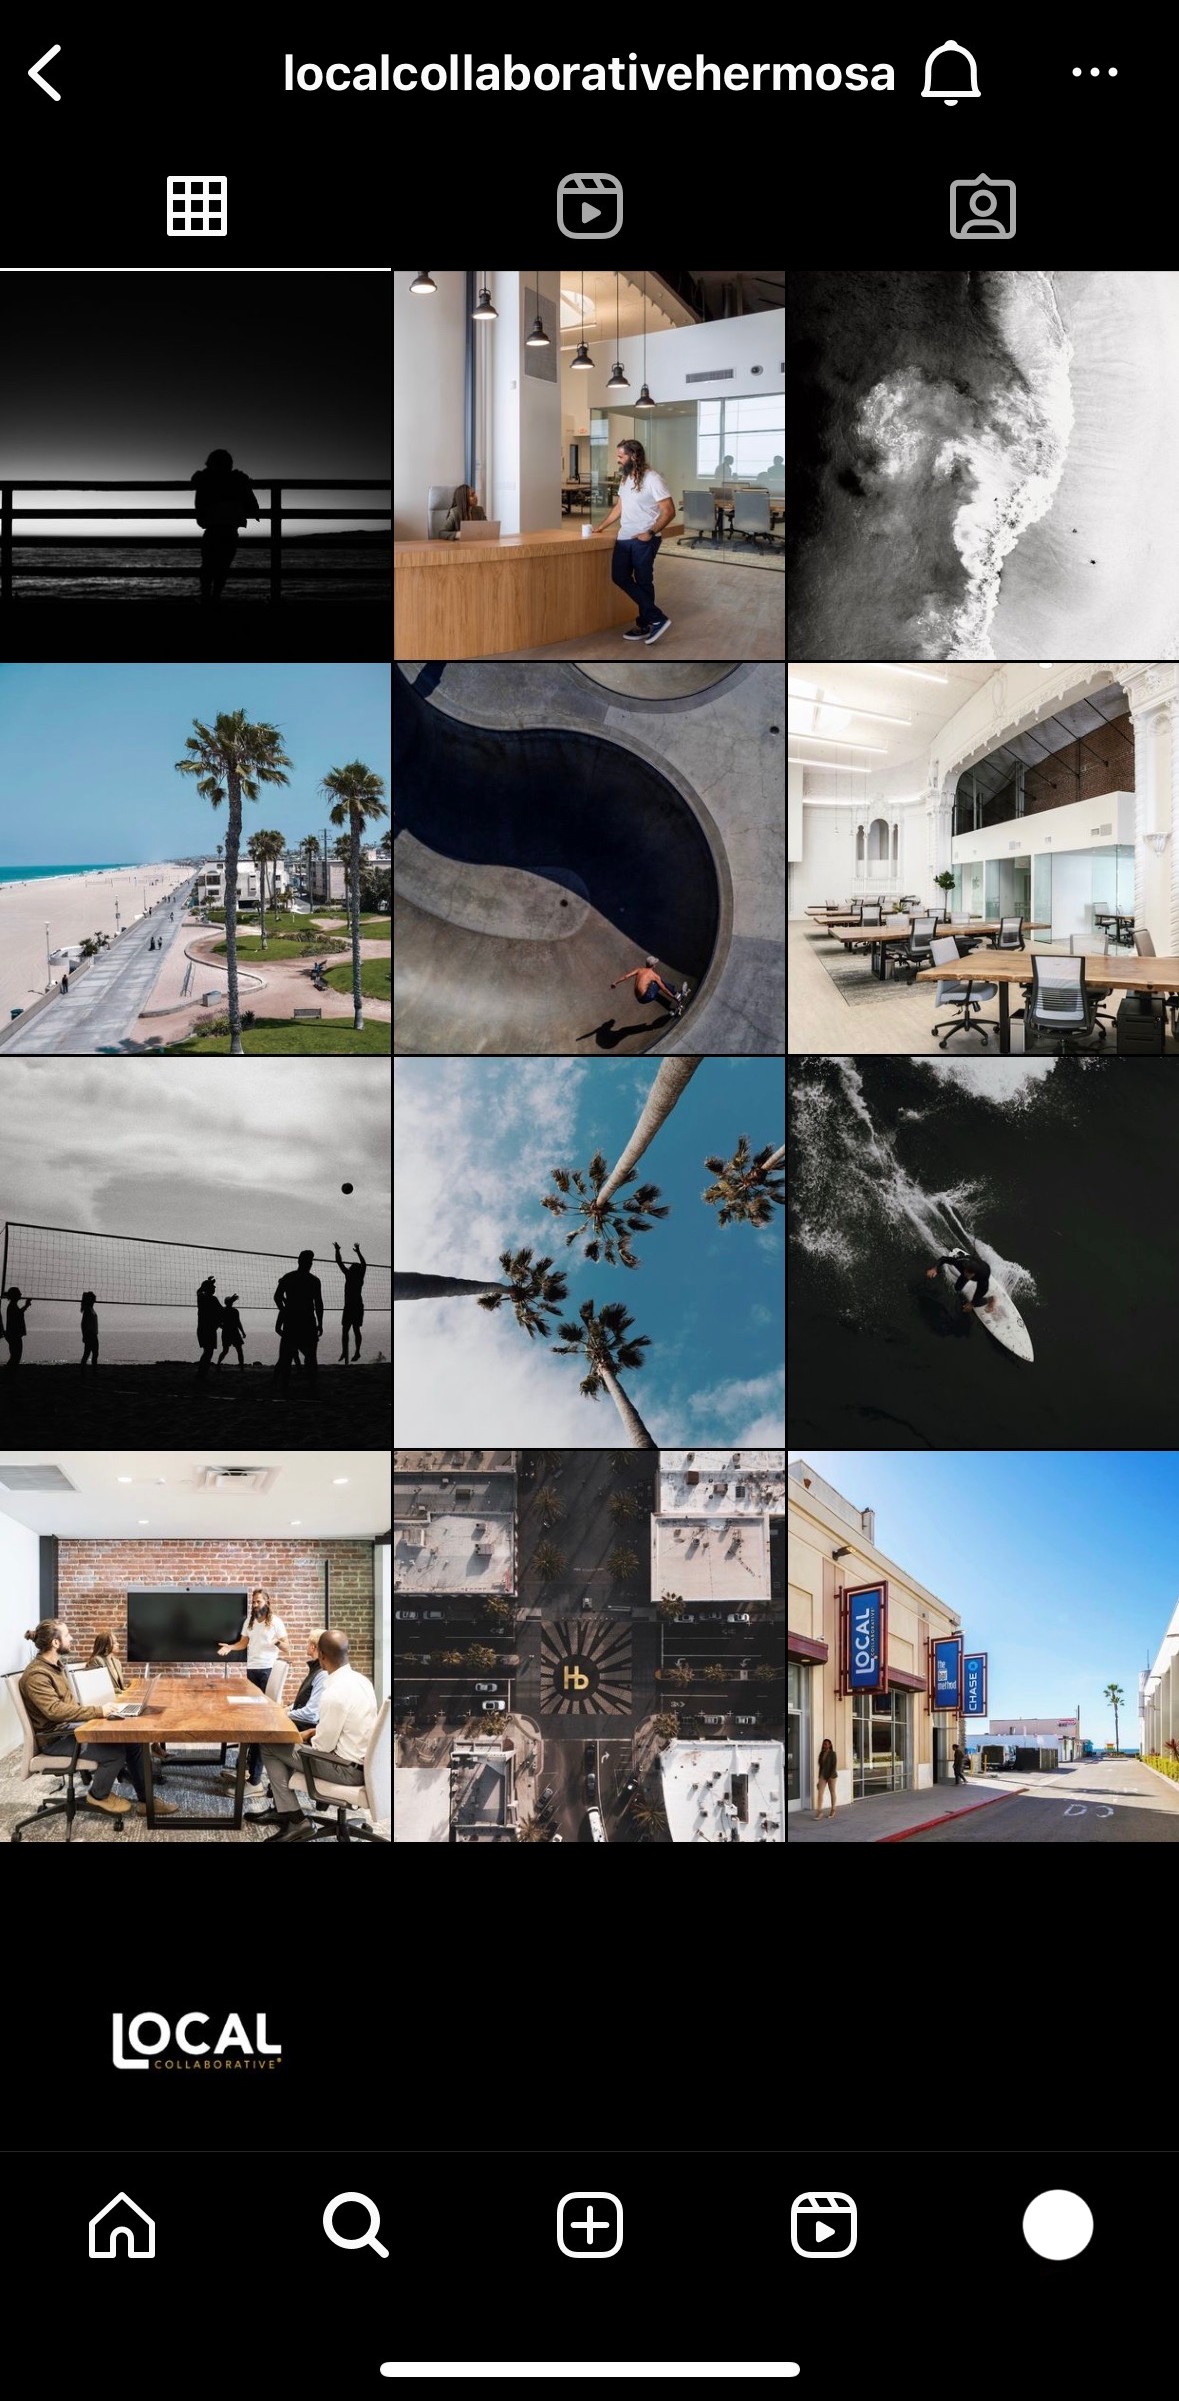 Local Collaborative Hermosa Instagram Grid